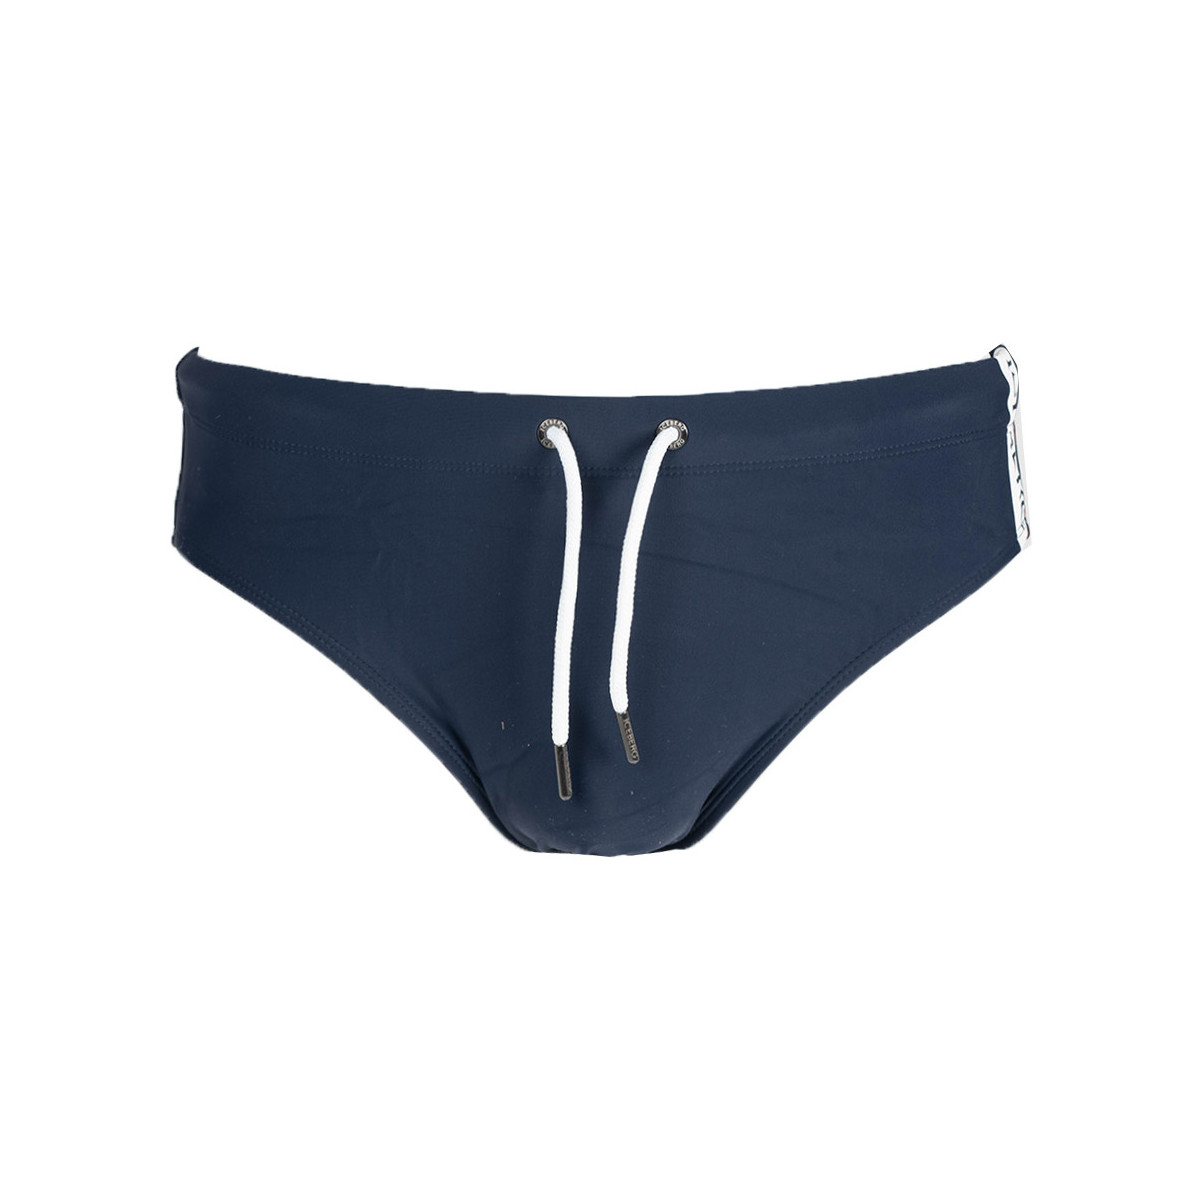 Vêtements Homme Maillots / Shorts de bain Iceberg ICE1MSP01 | Basic Bleu